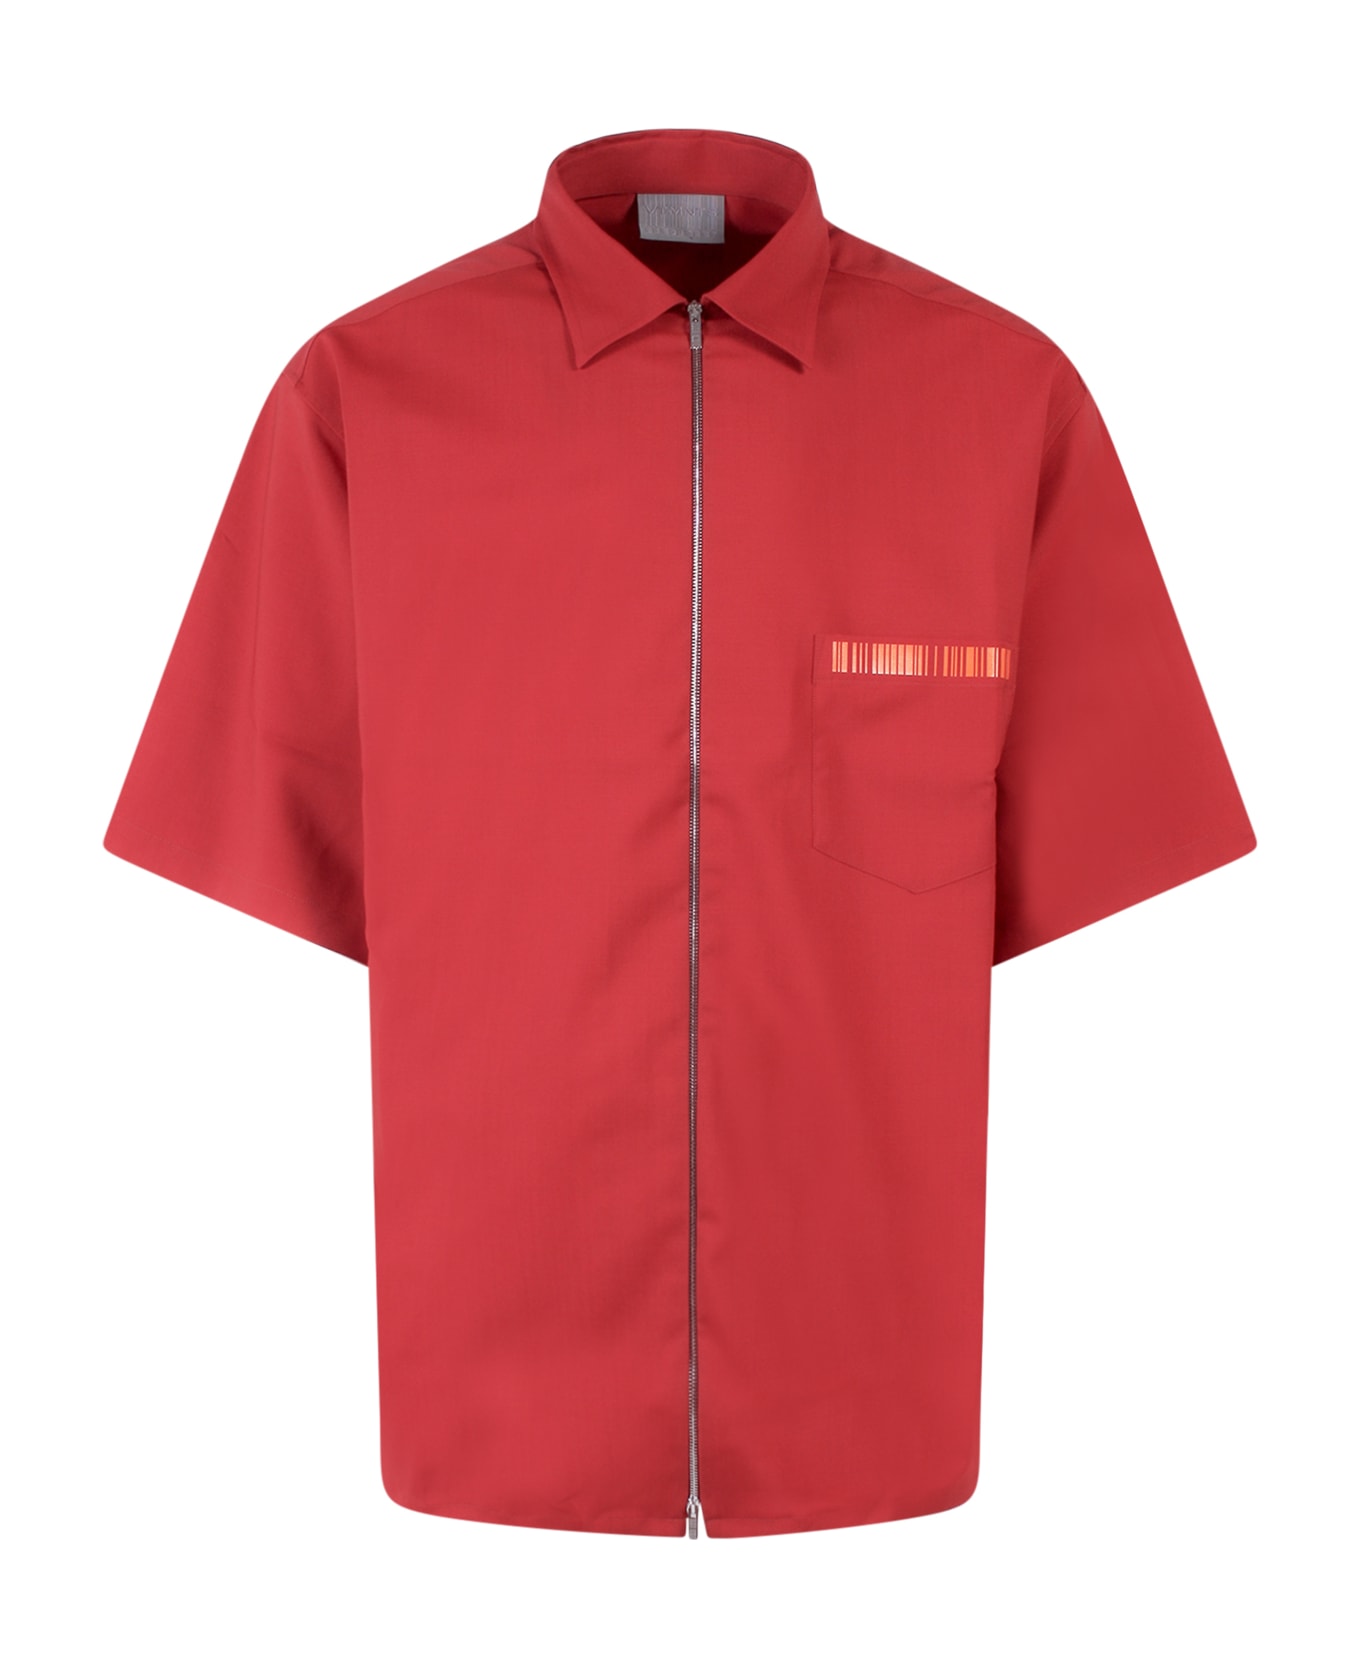 VTMNTS Shirt - Red シャツ